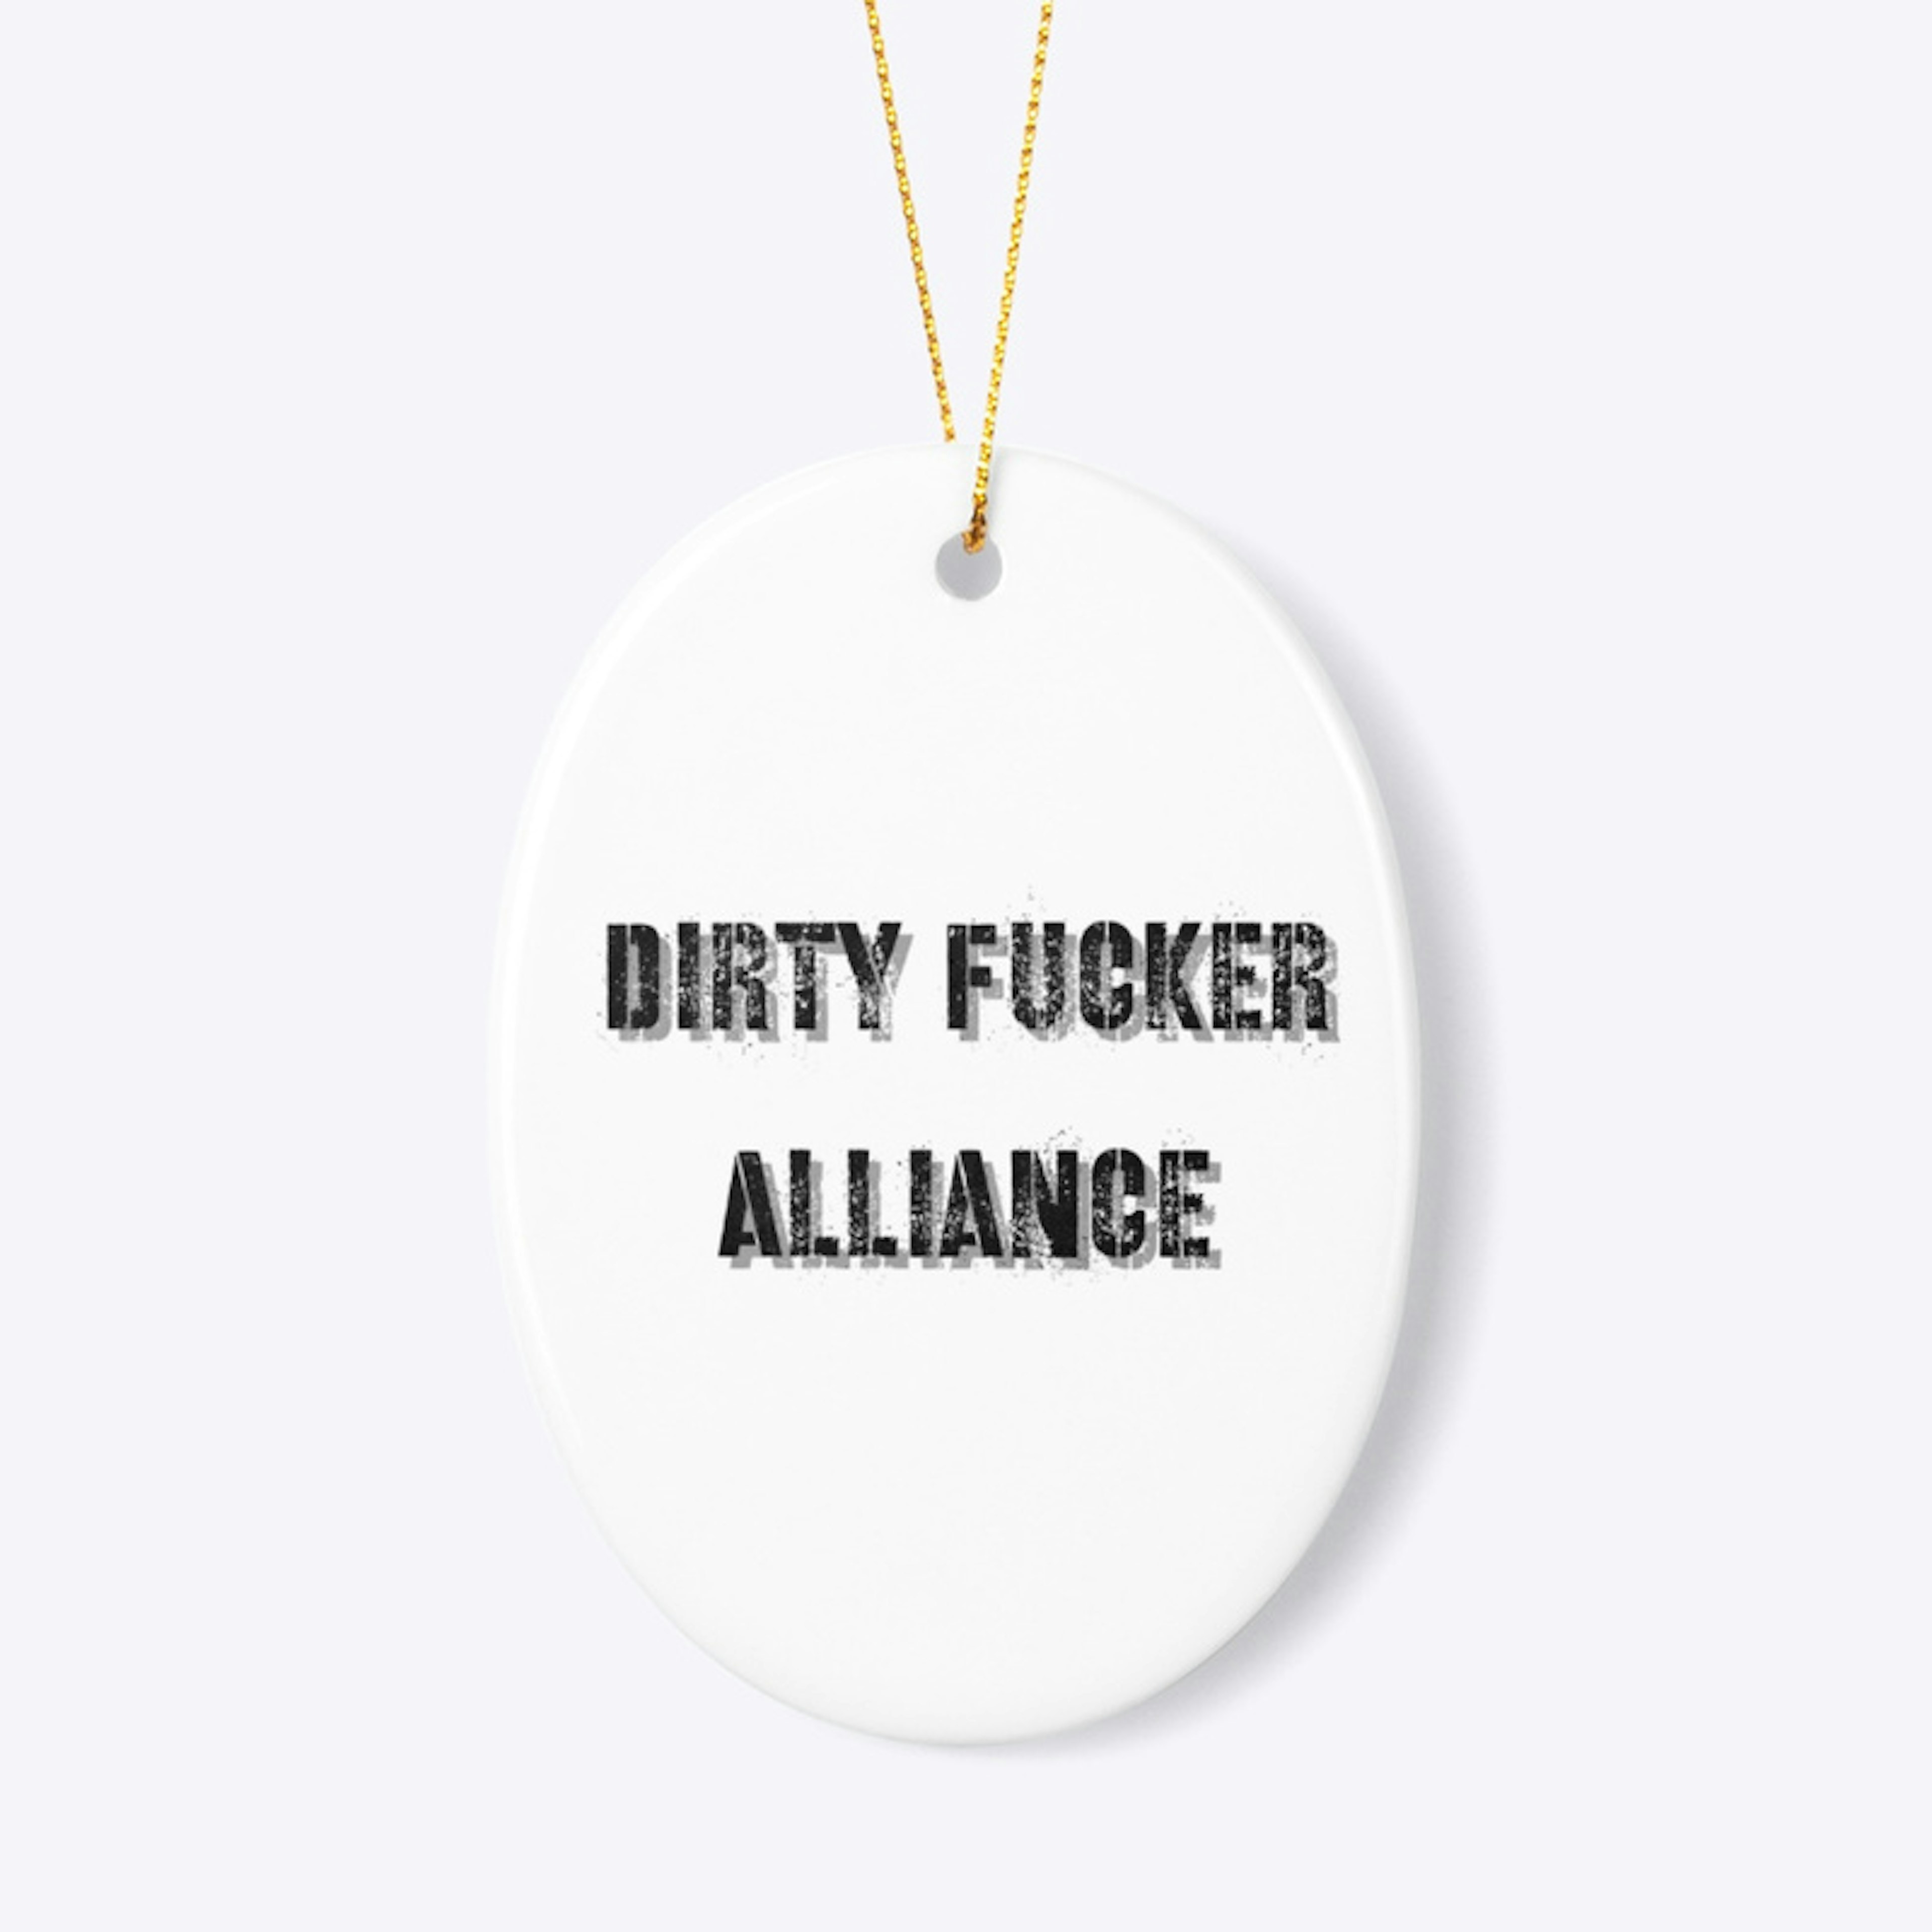 Dirty Fucker Alliance